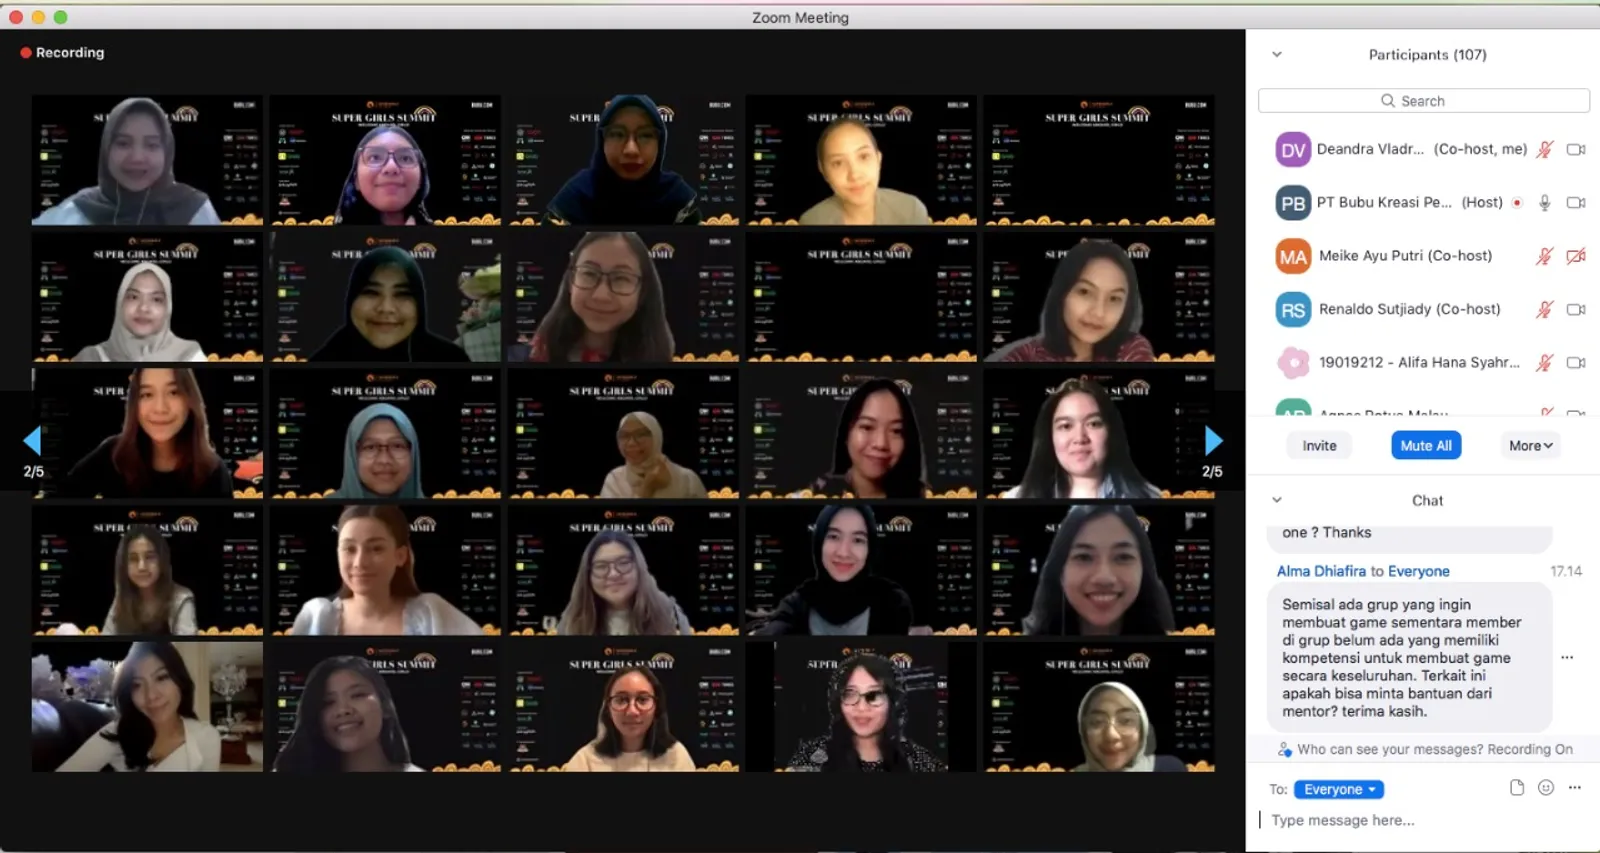 Supergirls in Tech Pilih 100 Mahasiswi untuk Solusi Gender Inequality